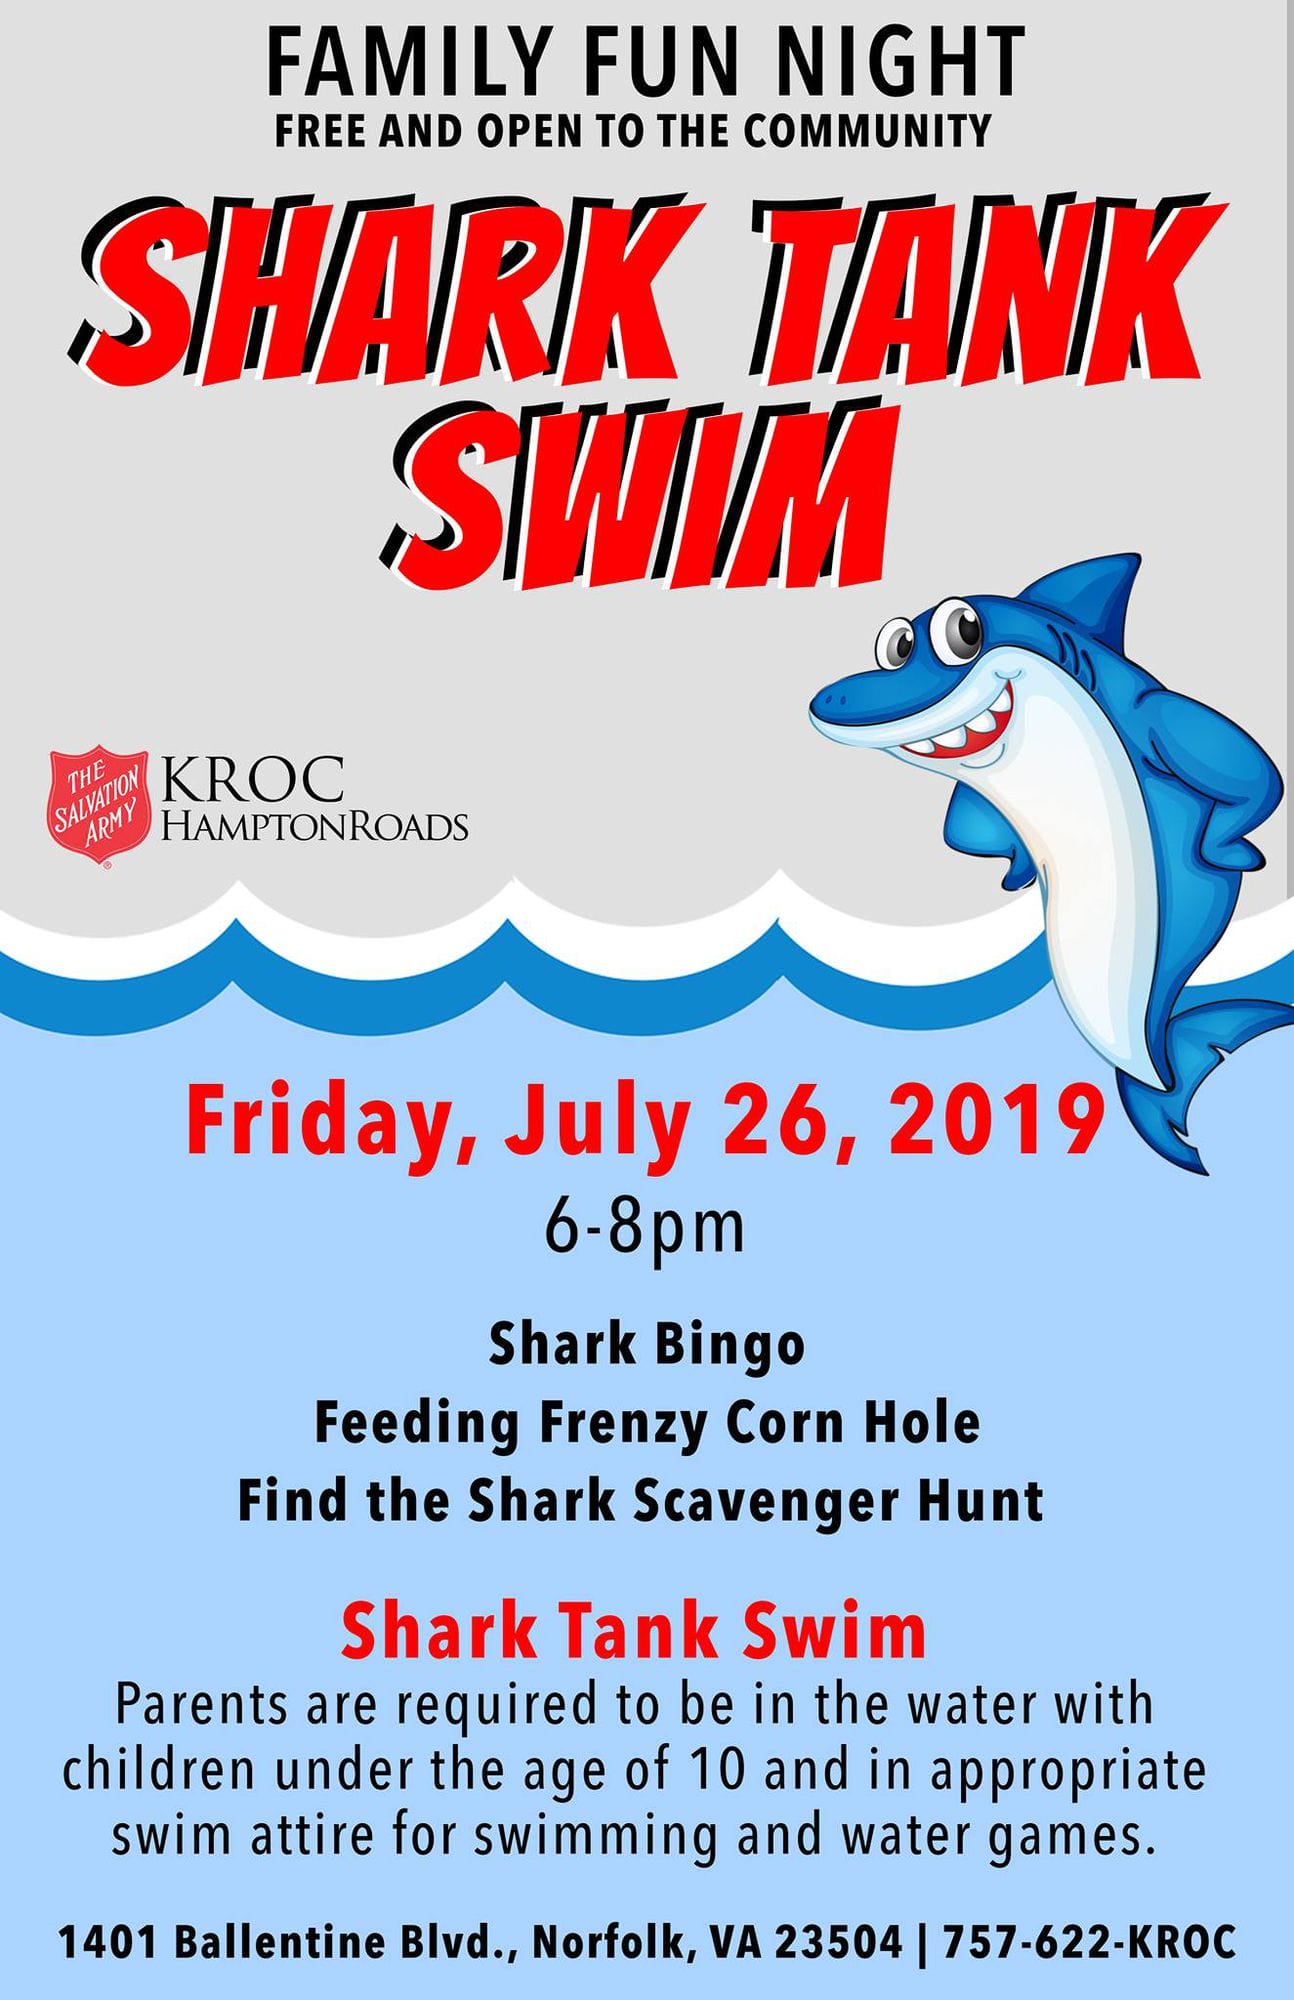 Free Family Fun Night at The Kroc Center Hampton Roads - Shark Tank Swim